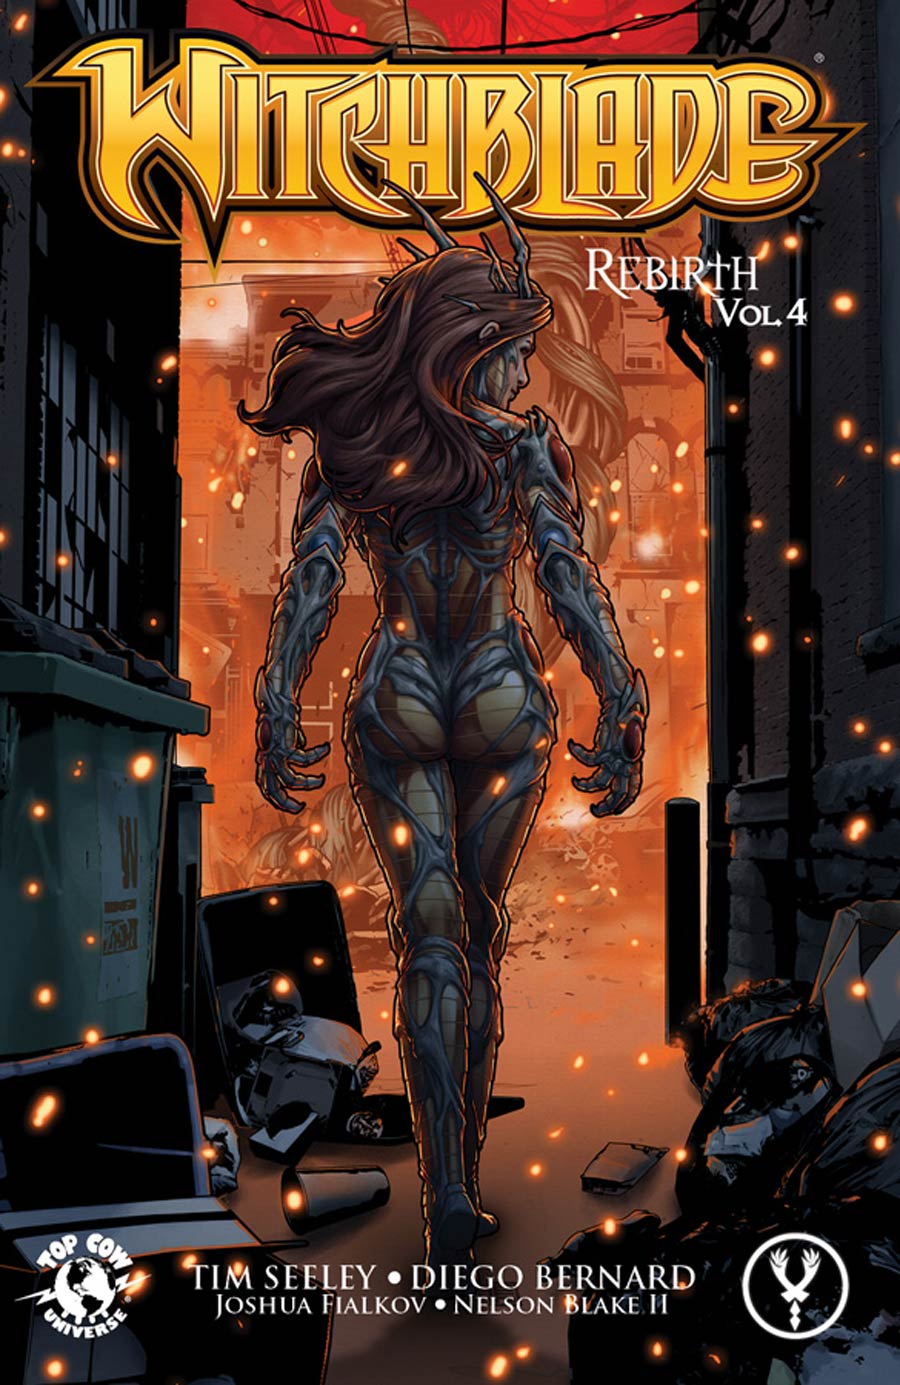 Witchblade Rebirth Vol 4 TP